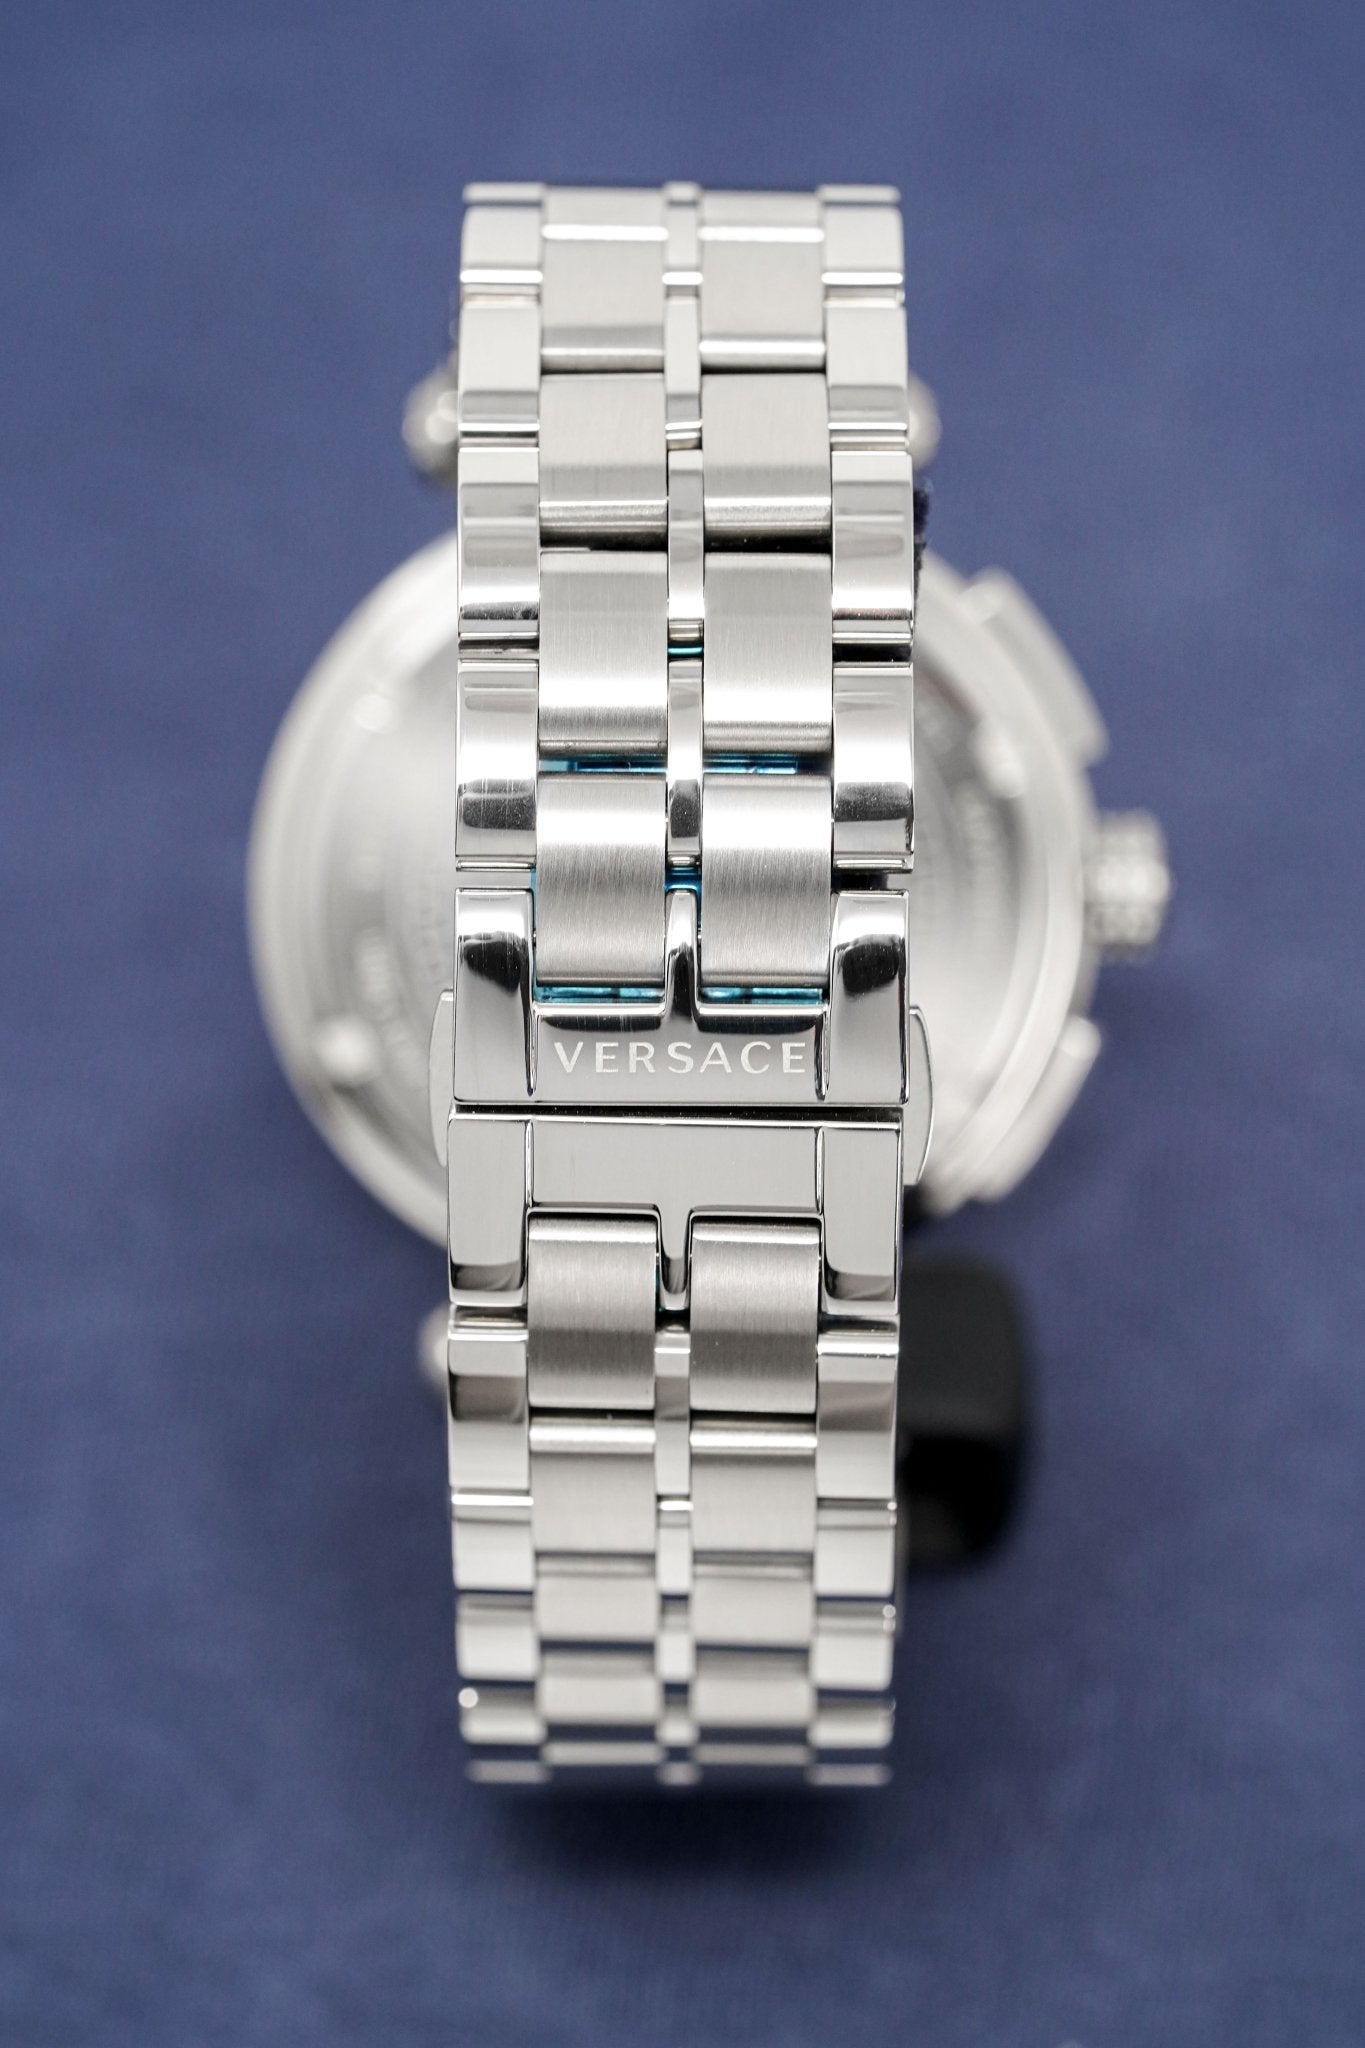 Versace Men's Chronograph Watch Aion Black VBR080017 - Watches & Crystals